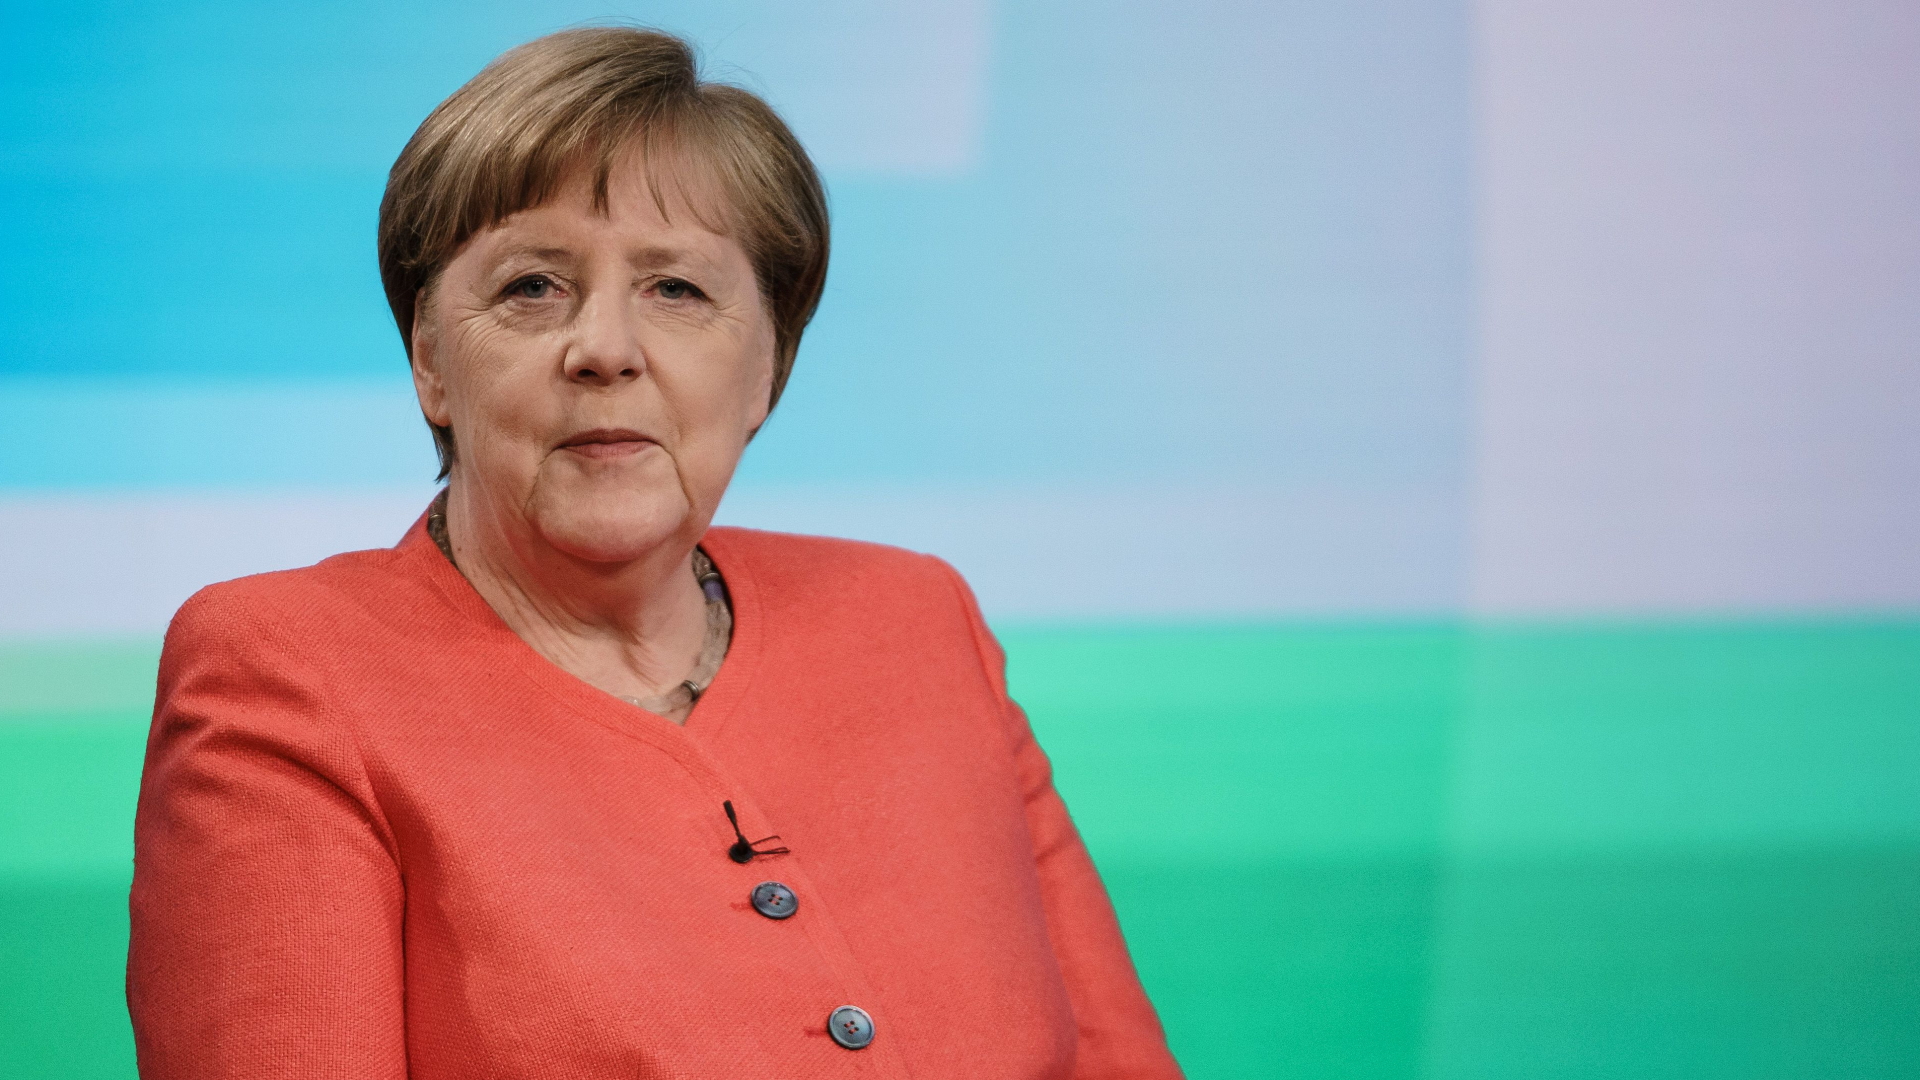 Bundeskanzlerin Angela Merkel in der ARD-Sendung "Farbe bekennen" | CLEMENS BILAN/POOL/EPA-EFE/Shutt